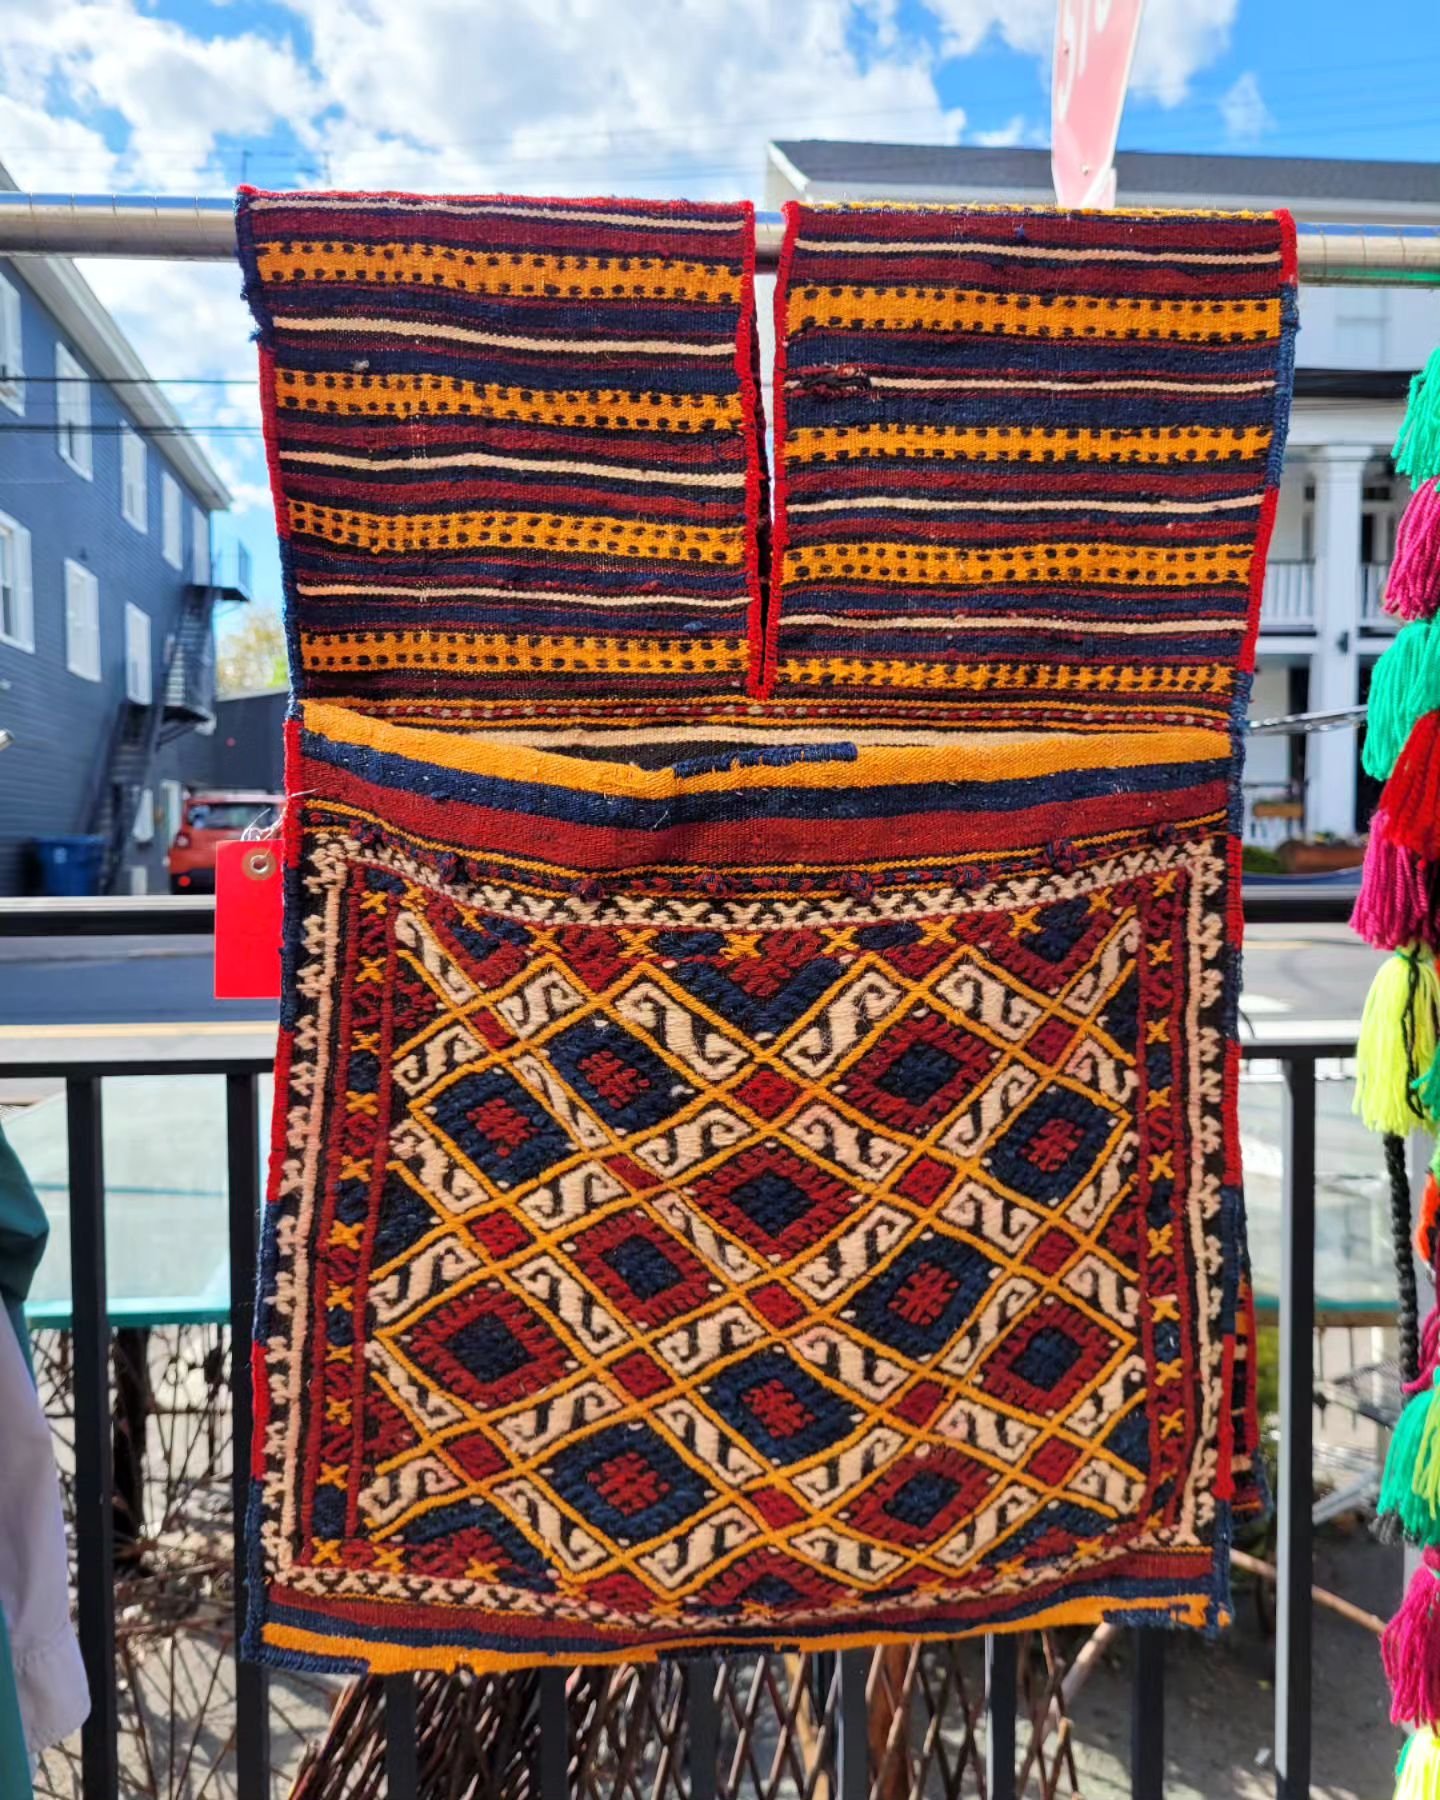 Beautiful camel bag 

$50 

#mergegallery #frenchtownnj #camelbag #homedecor #bag #rug #ithaspockets #interiordesign #interiors #decorinspo